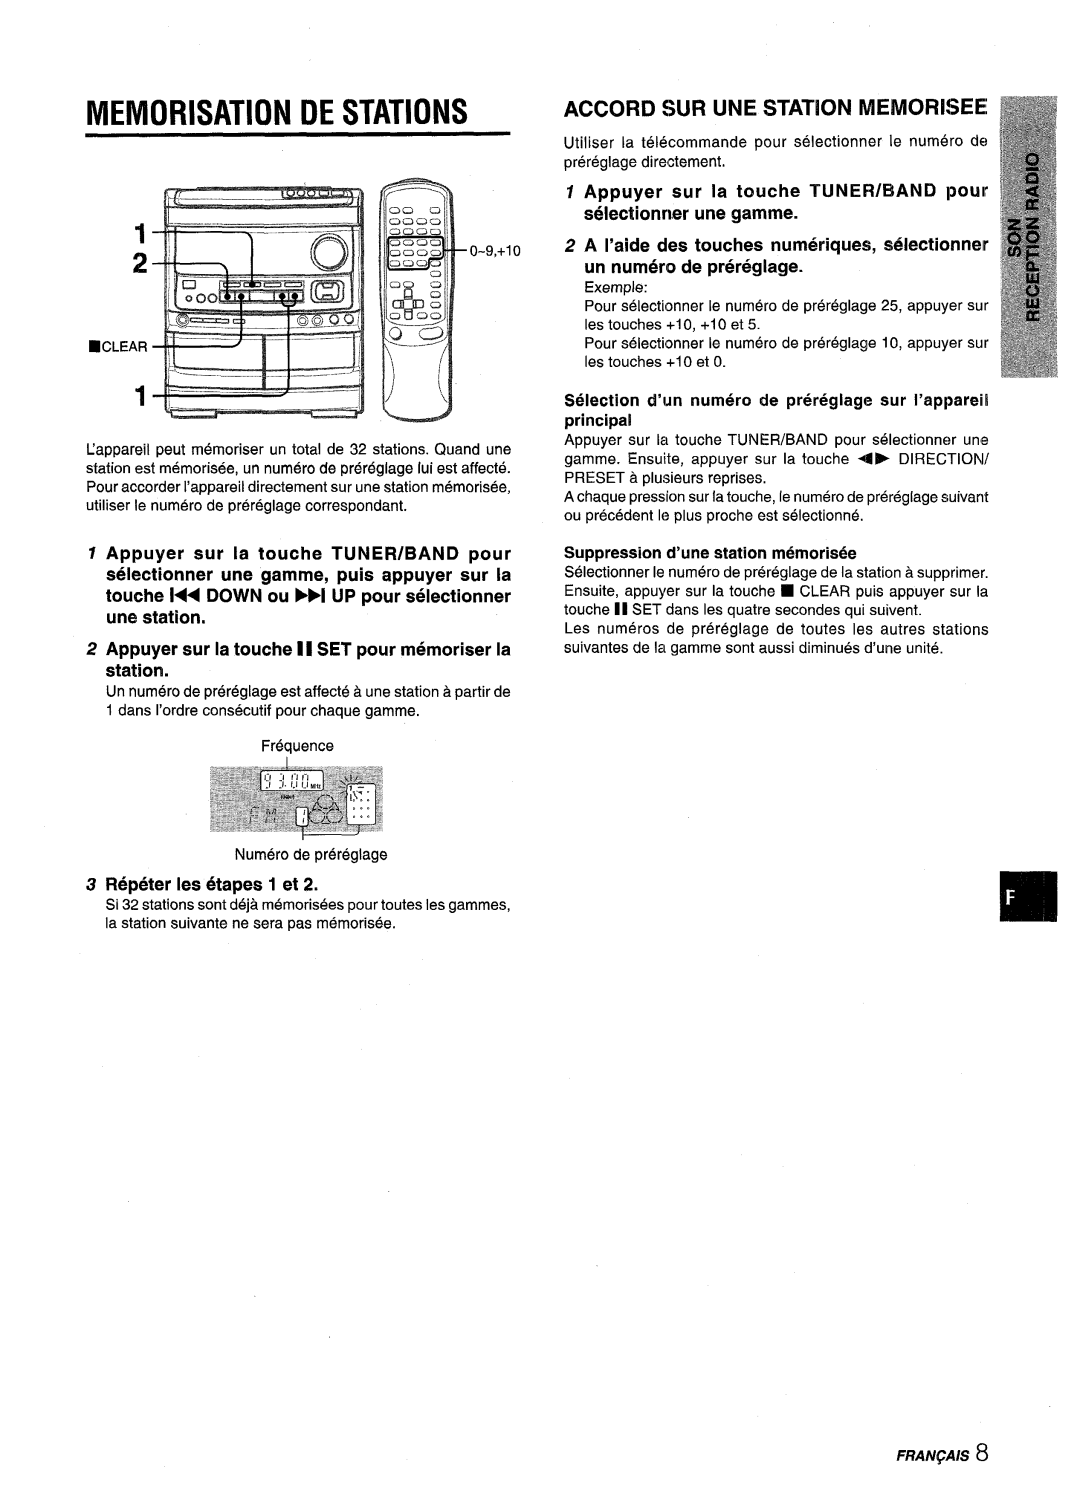 Aiwa NSX-V9000 manual Memorisation De Stations, Accord Sur Une Station Memorisee, selectionn.er une gamme 